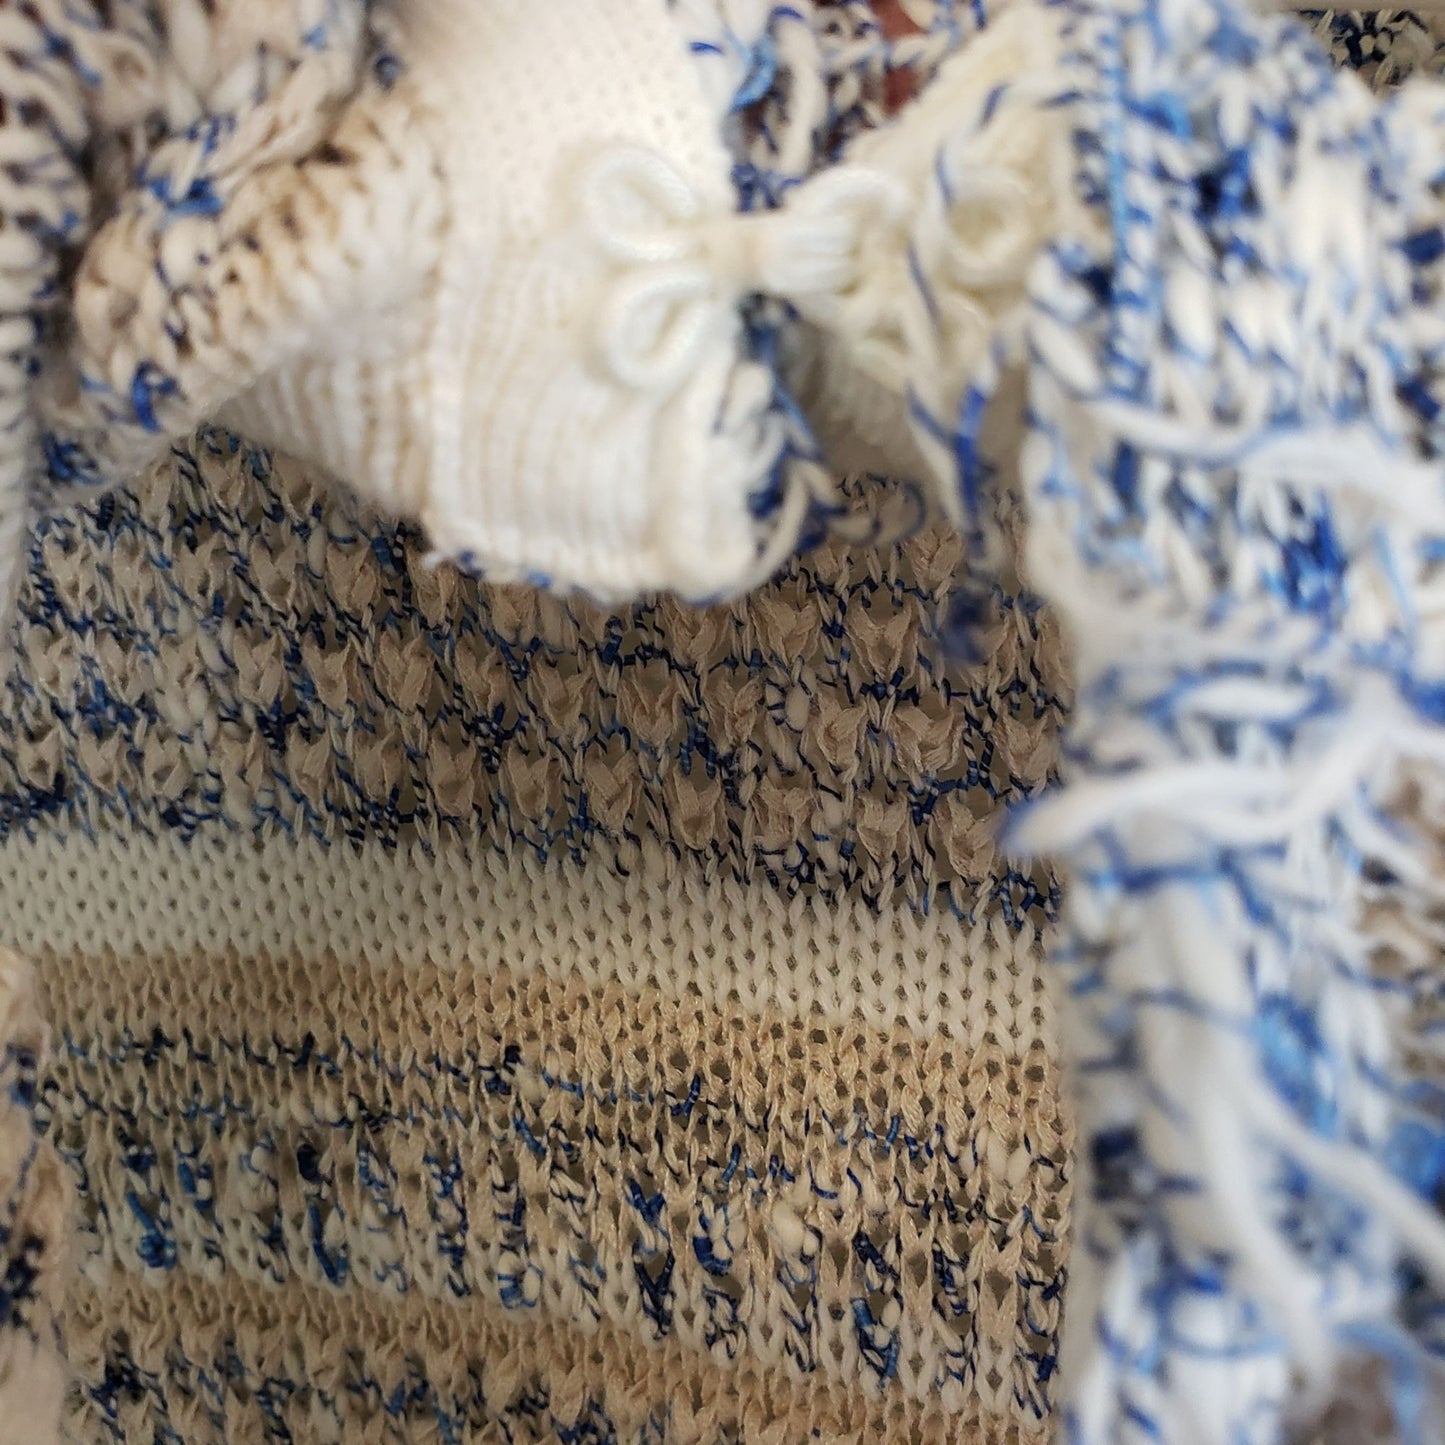 Chico's Knit 3/4 Sleeve Tweed Knit Cardigan Sweater with Fringe Trim Size Medium